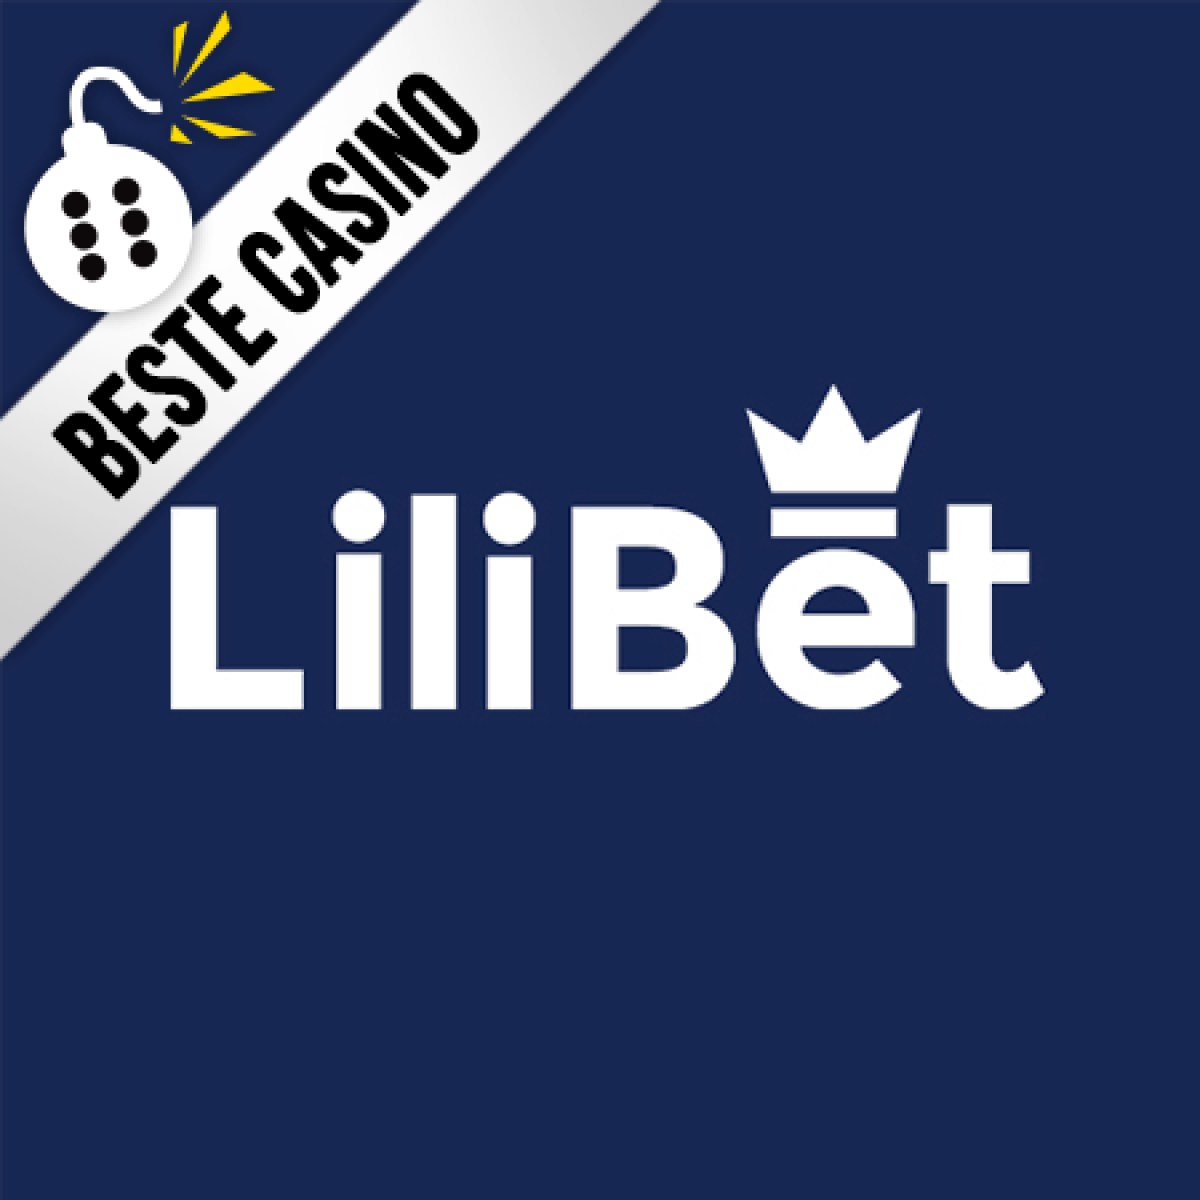 LiliBet logo